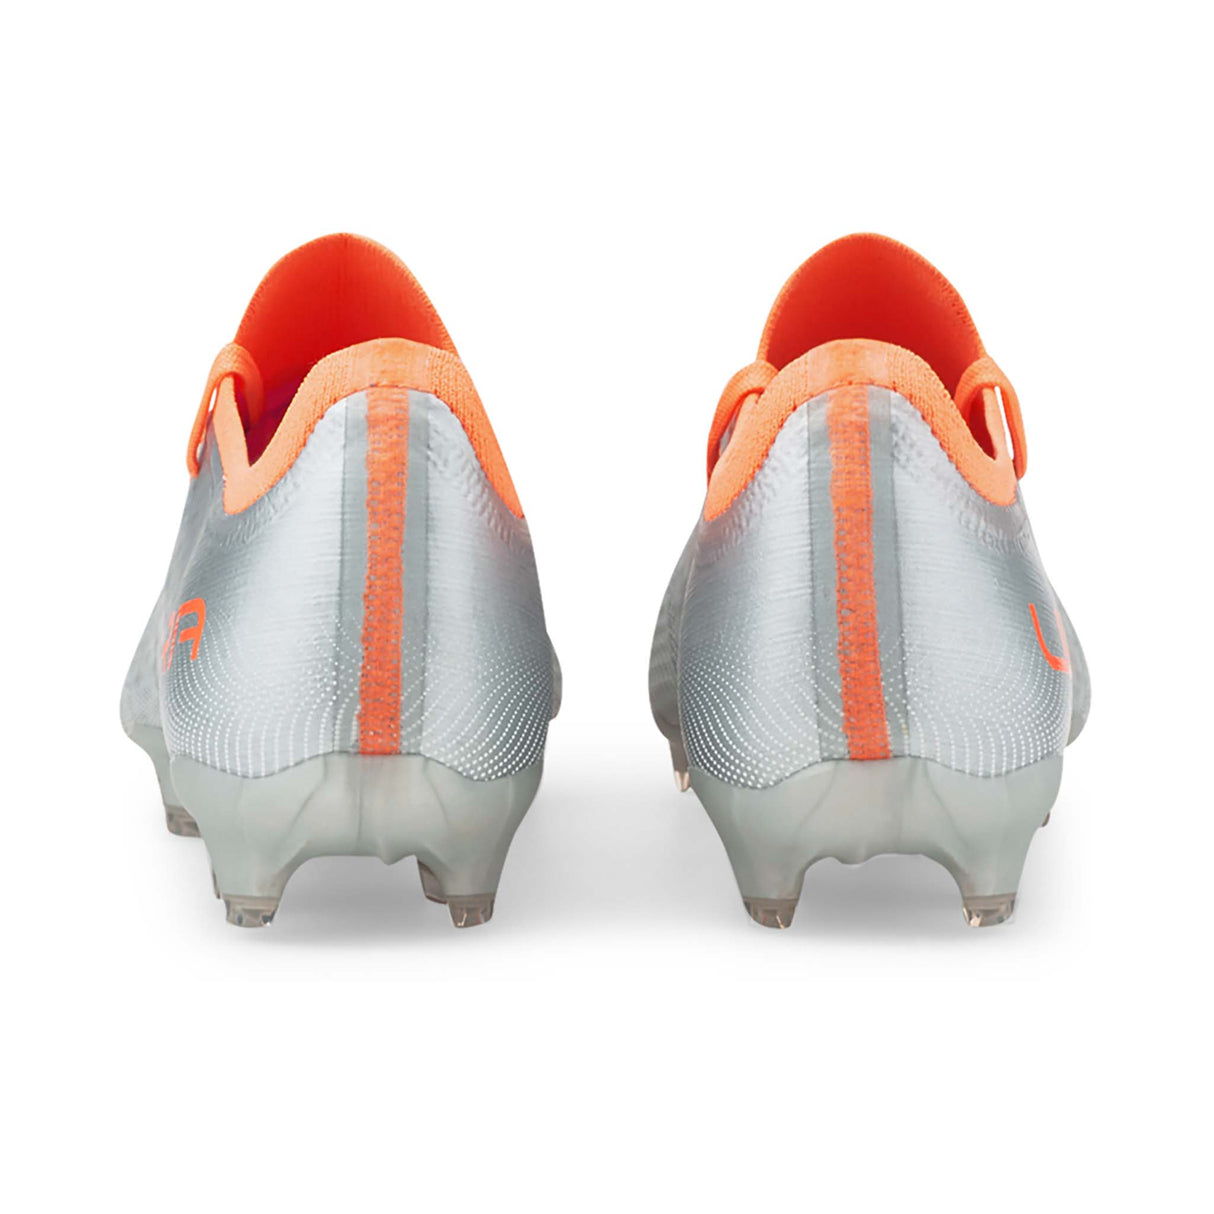 Puma Ultra 3.4 FG/AG chaussures de soccer adulte diamond silver orange talons